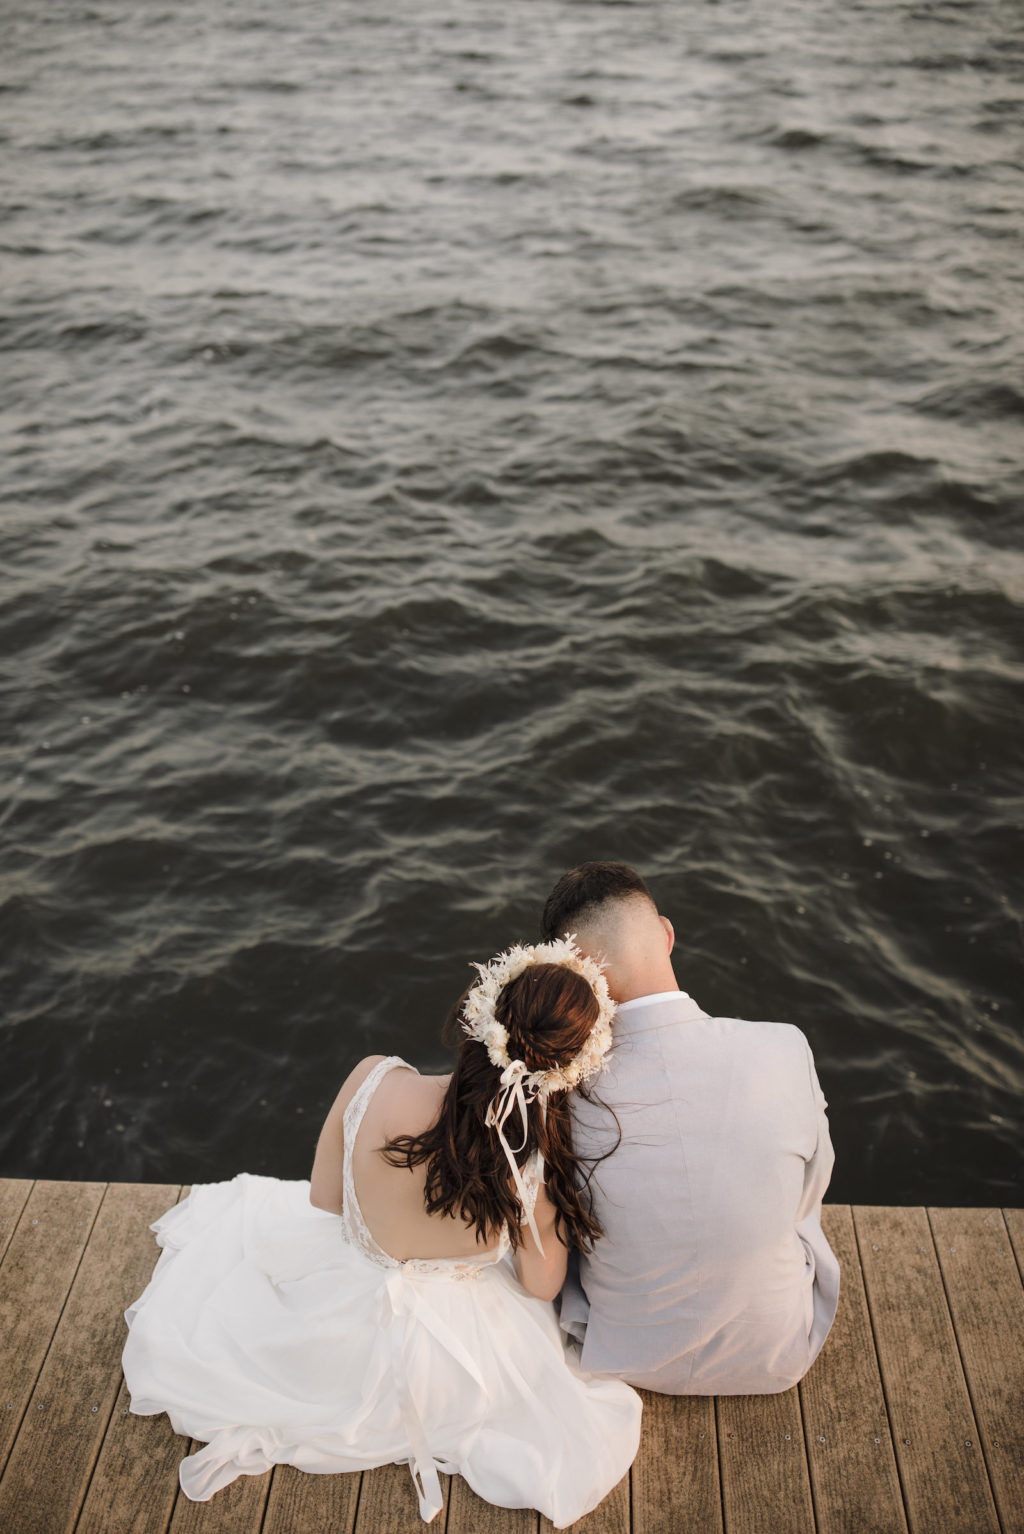 Boho Bride and Groom Wedding Portrait | Sarasota Waterfront Wedding Venue | Planner Kelly Kennedy Weddings and Events | Alisa Sue Photography